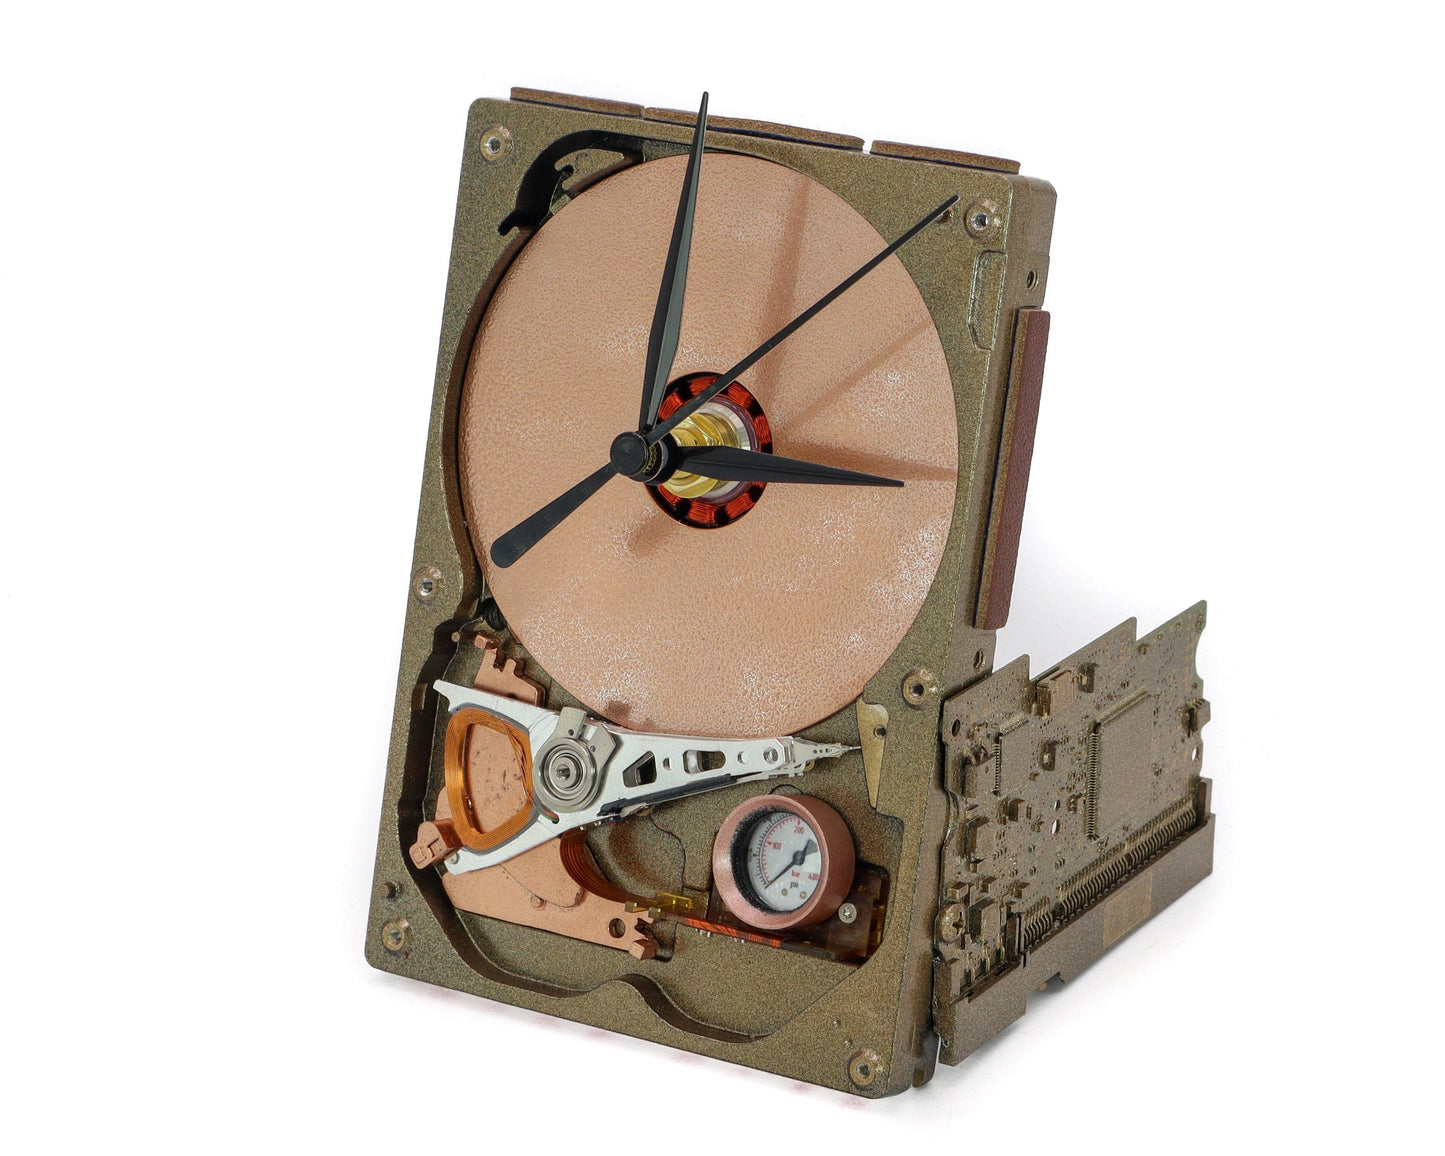 LightAndTimeArt Steampunk Clock Upcycled Steampunk Antikythera Hard Drive Clock - Modern Desk Clock - Gift for geeks, nerds, office, IT - Victorian, industrial design